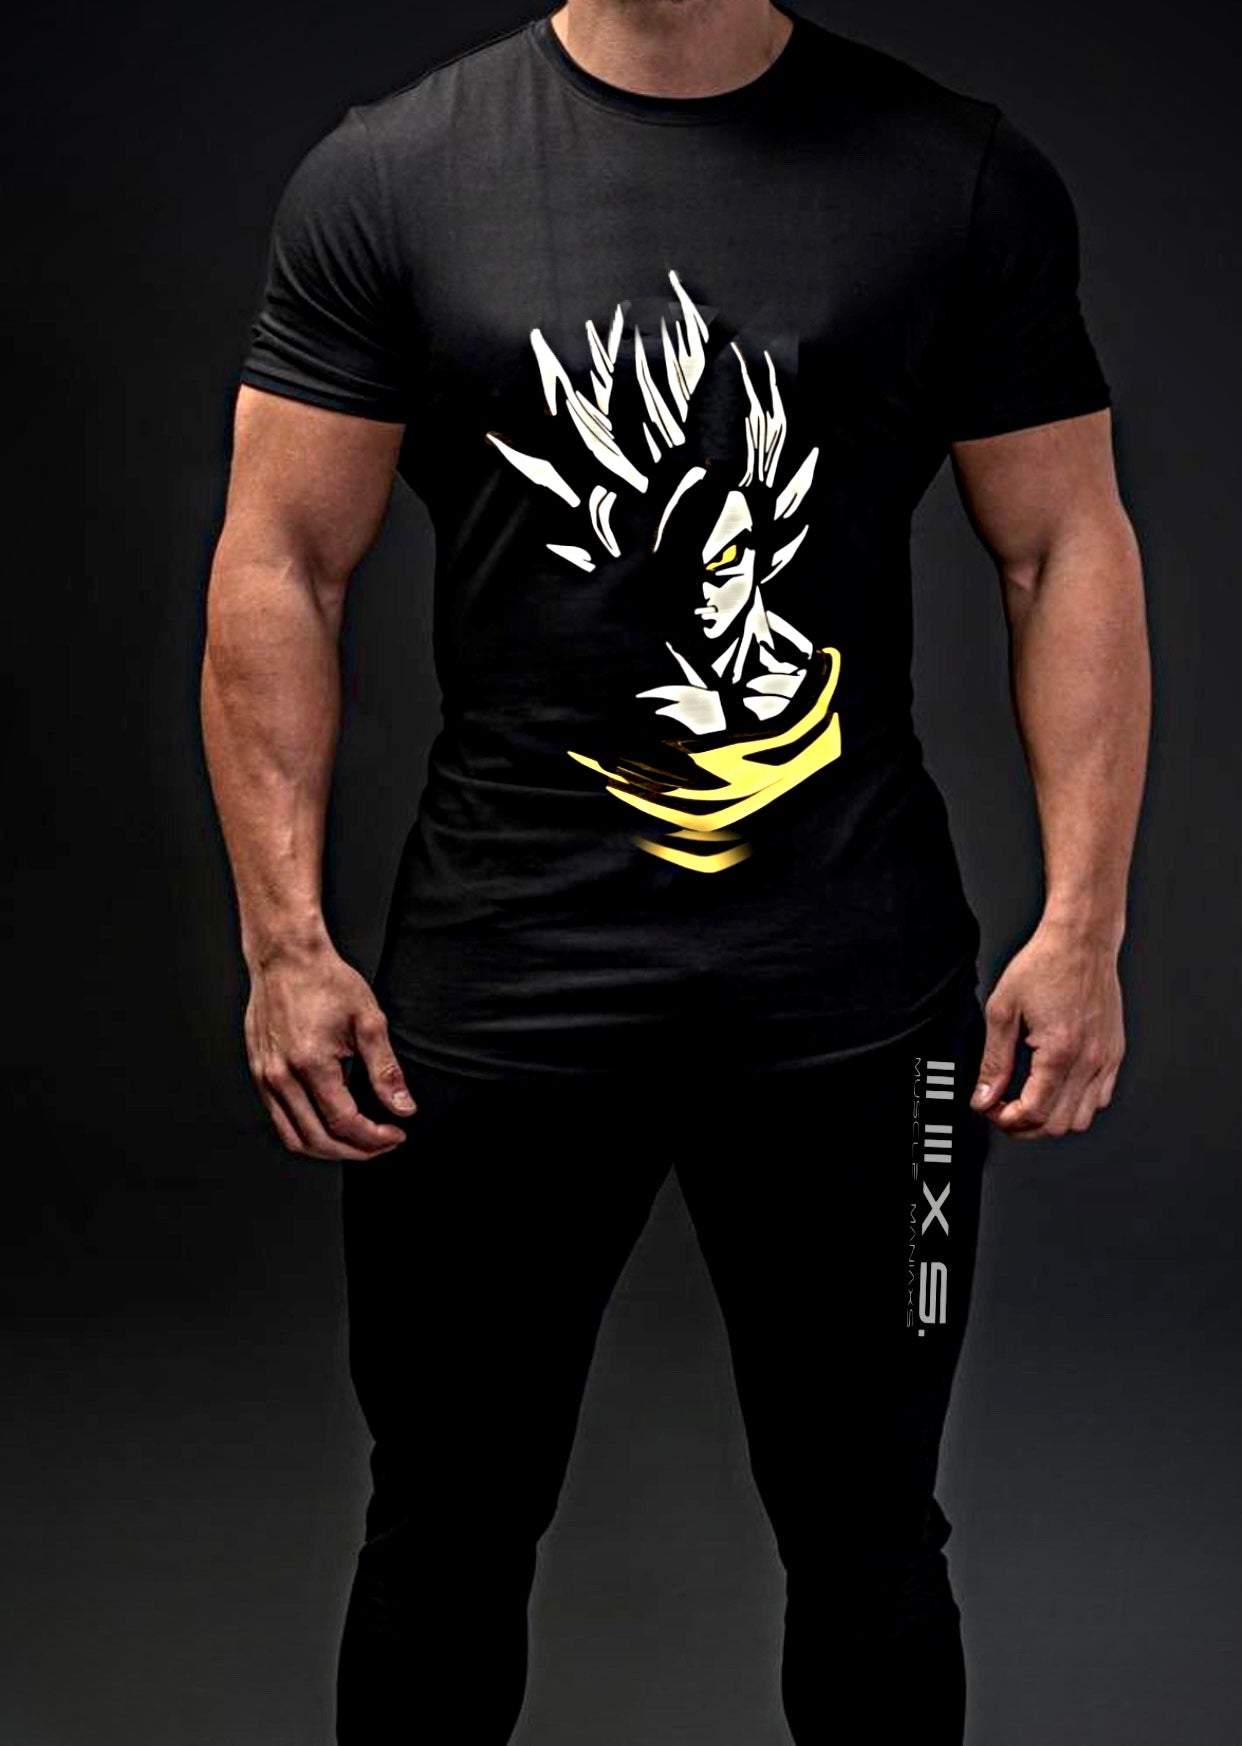 DRAGON BALL Z (GOLD SERIES )BLACK Tshirt model 5.0